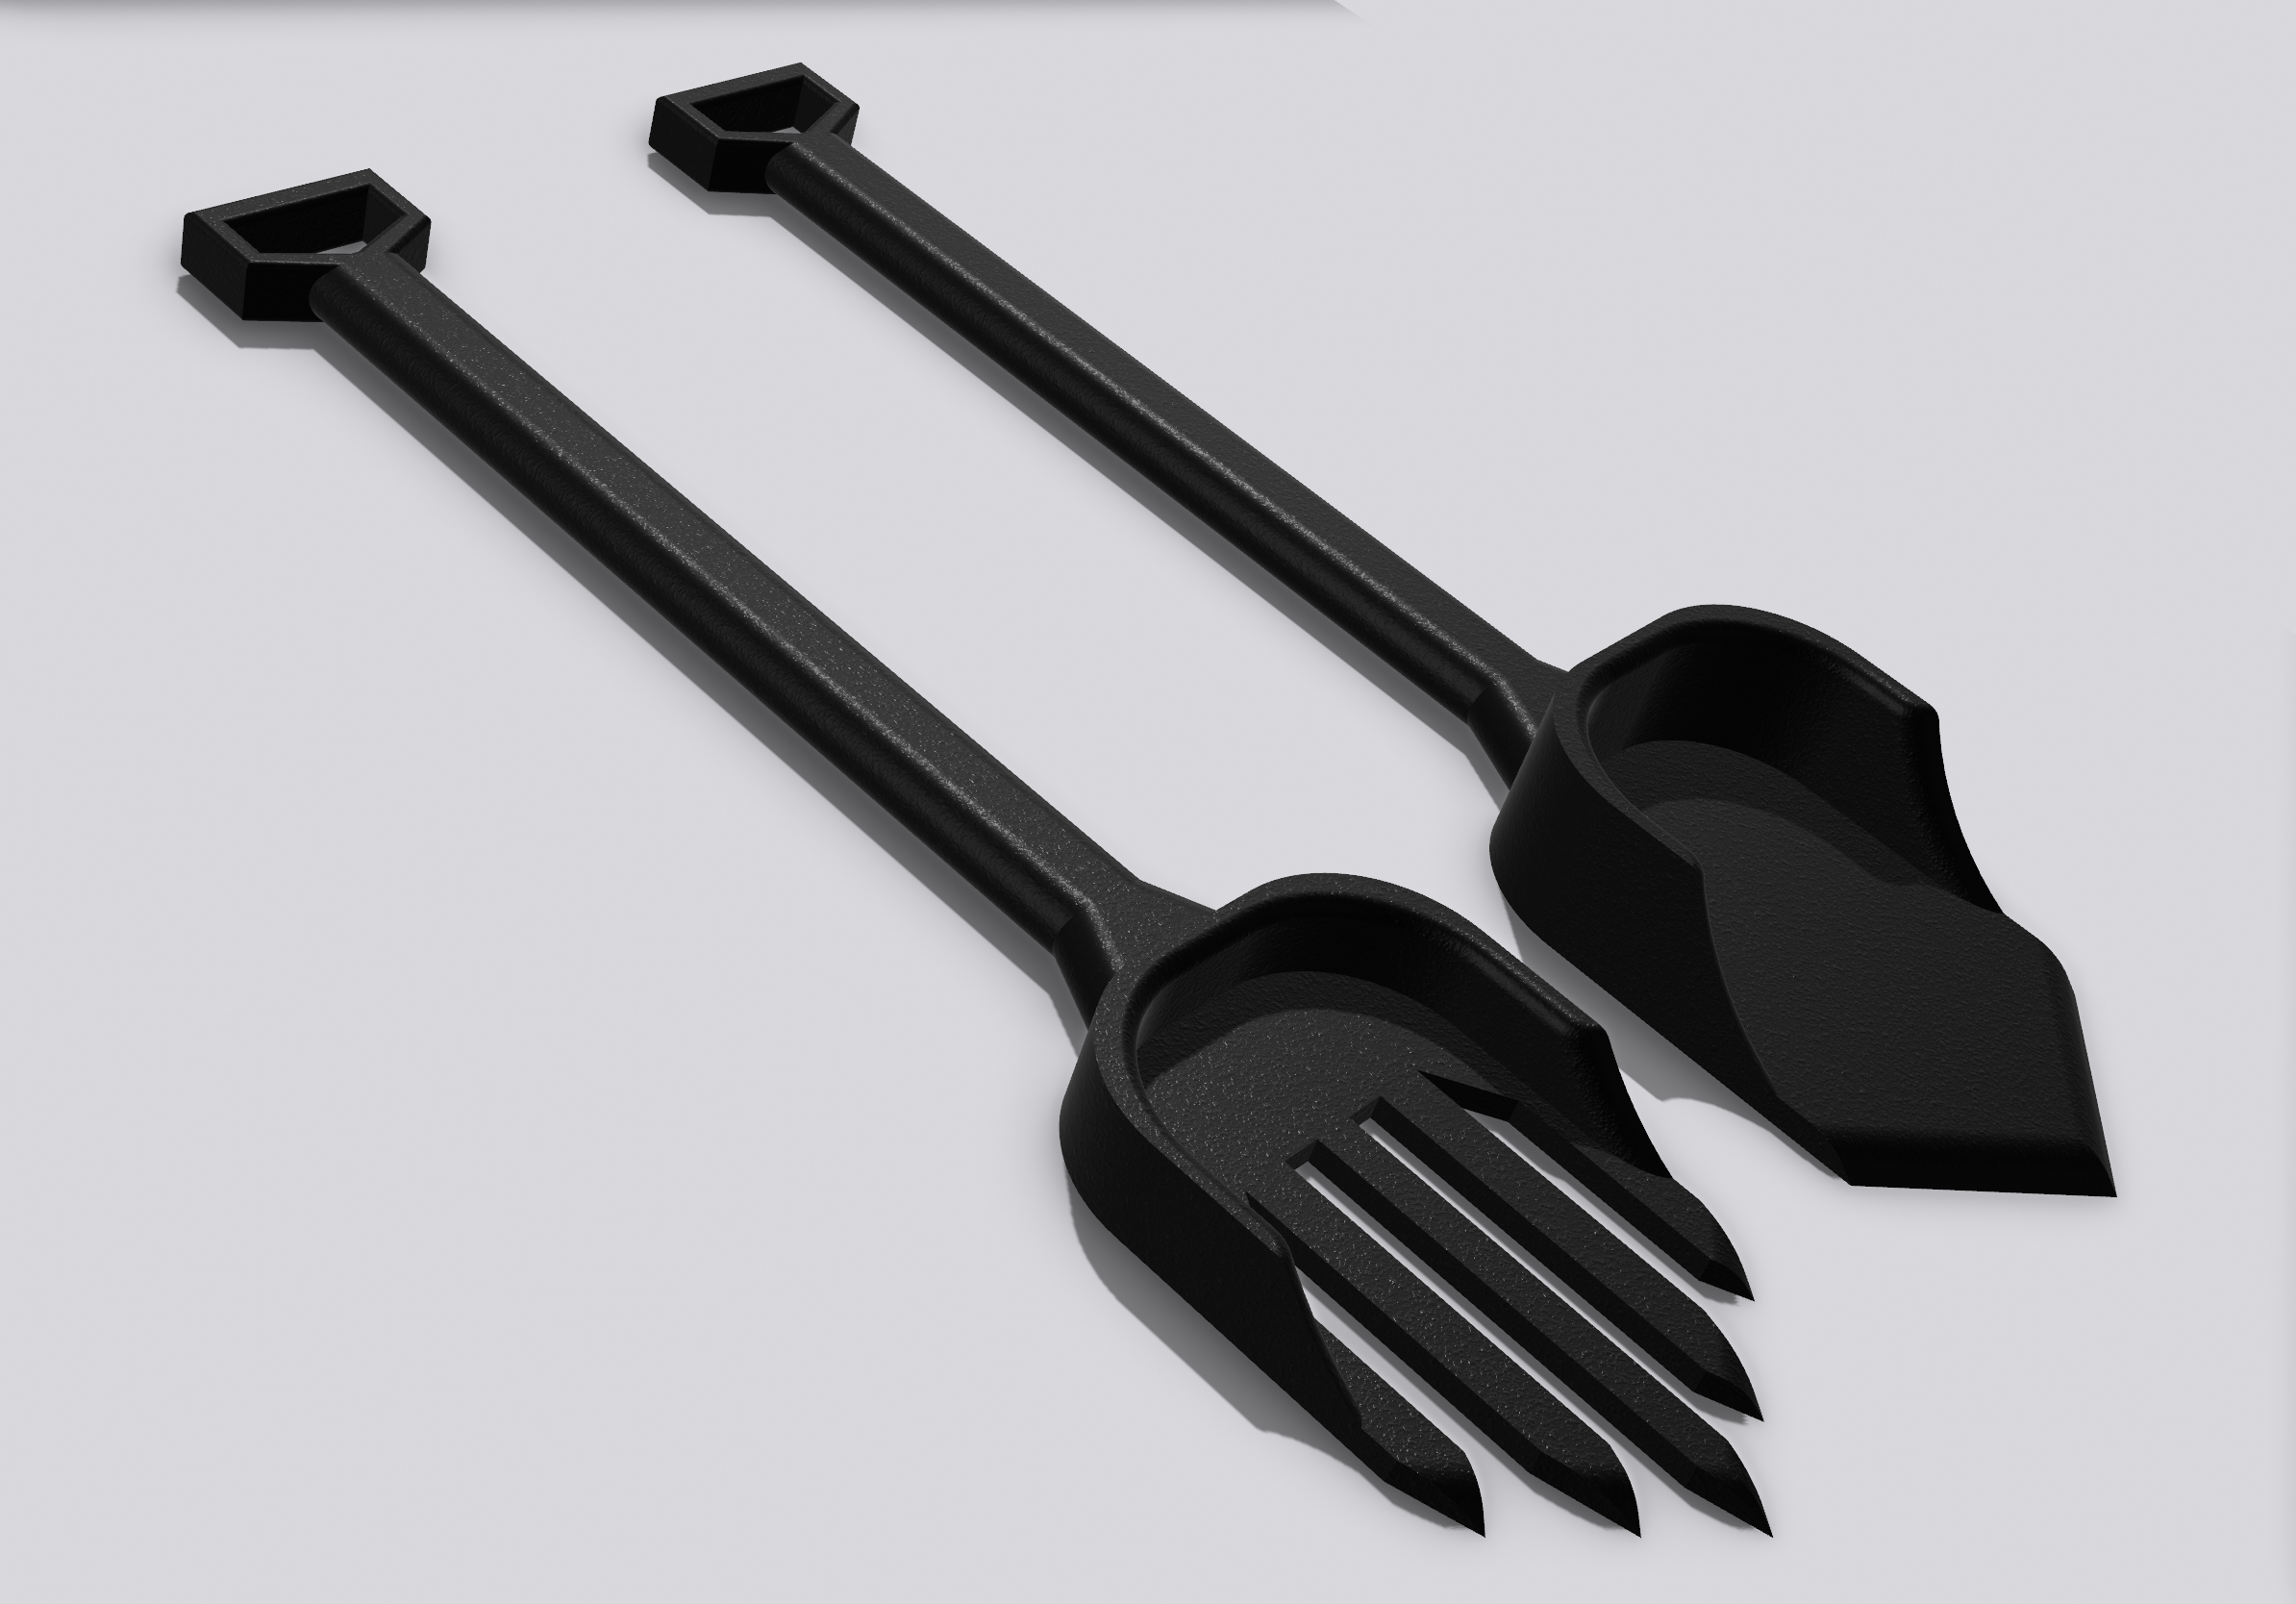 Mini Shovel and Forks